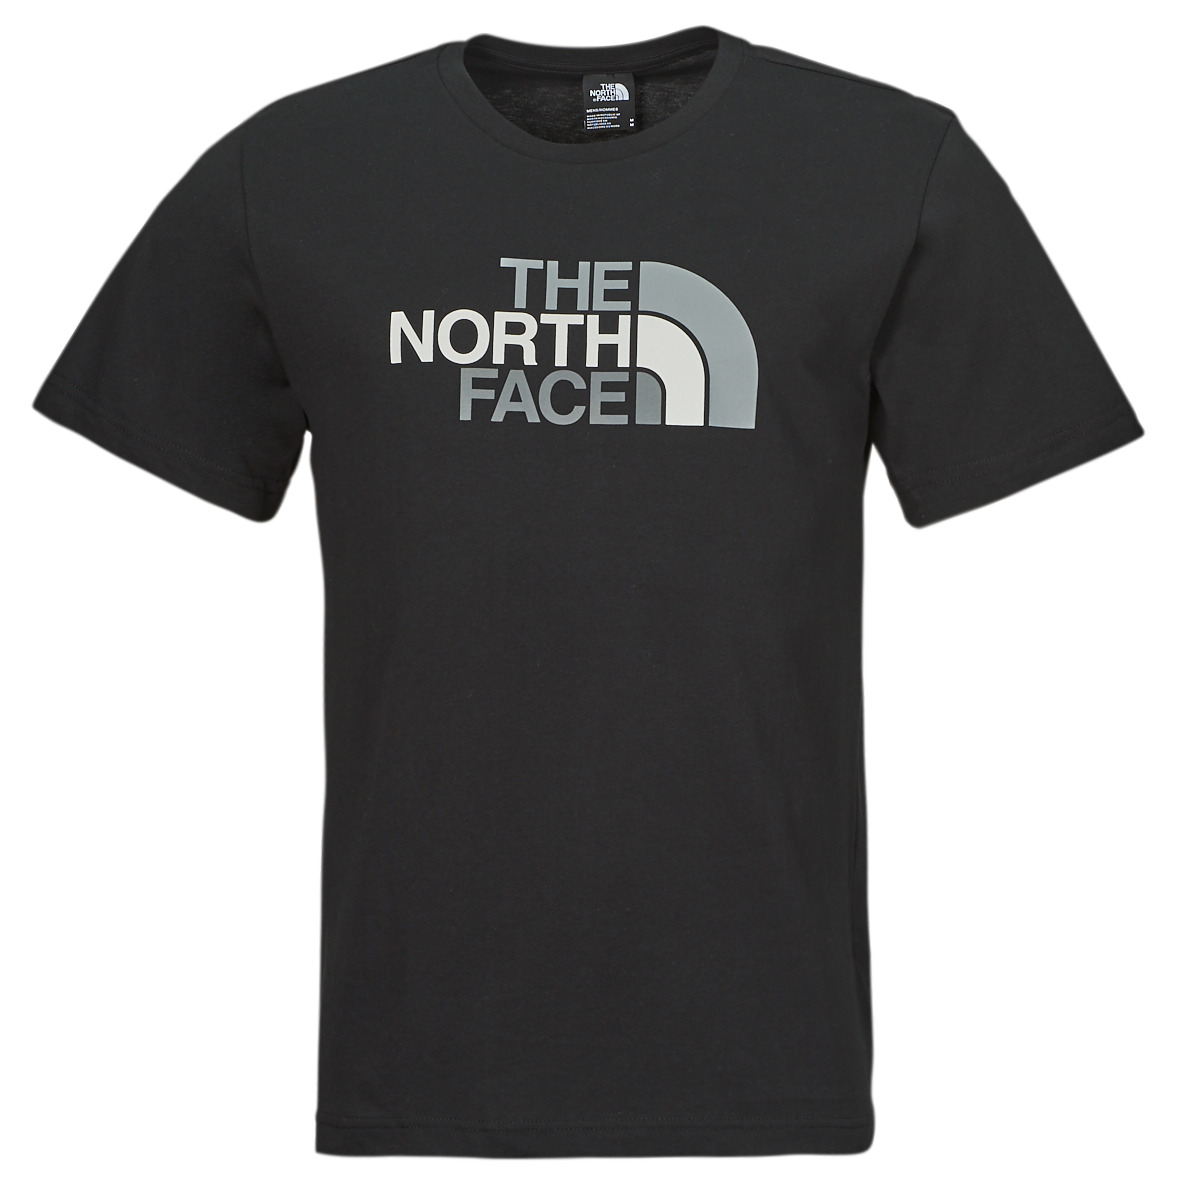 textil Herre T-shirts m. korte ærmer The North Face S/S EASY TEE Sort